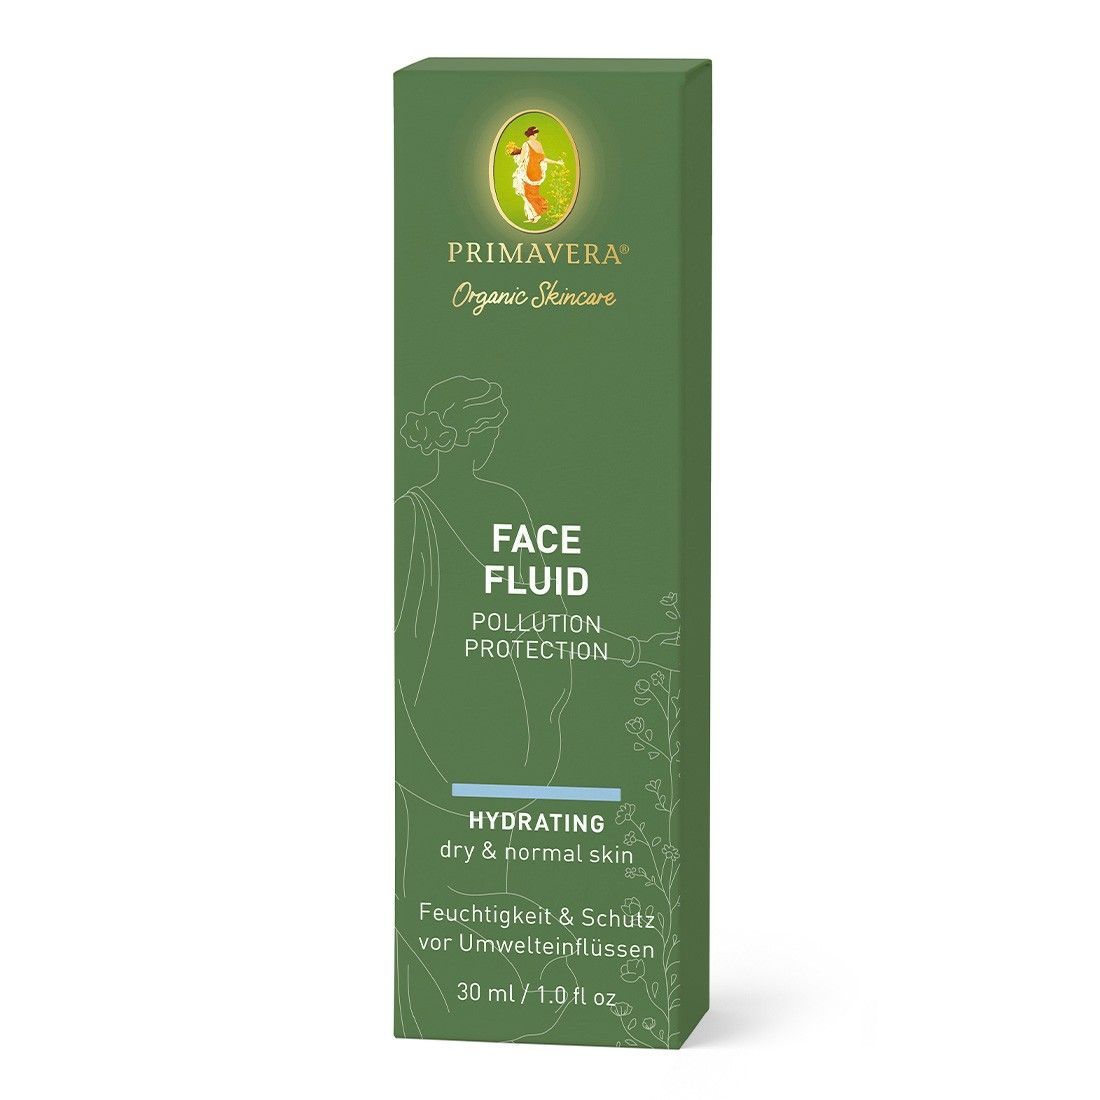 Primavera Organic Skincare Face Fluid Pollution Protection Hydrating